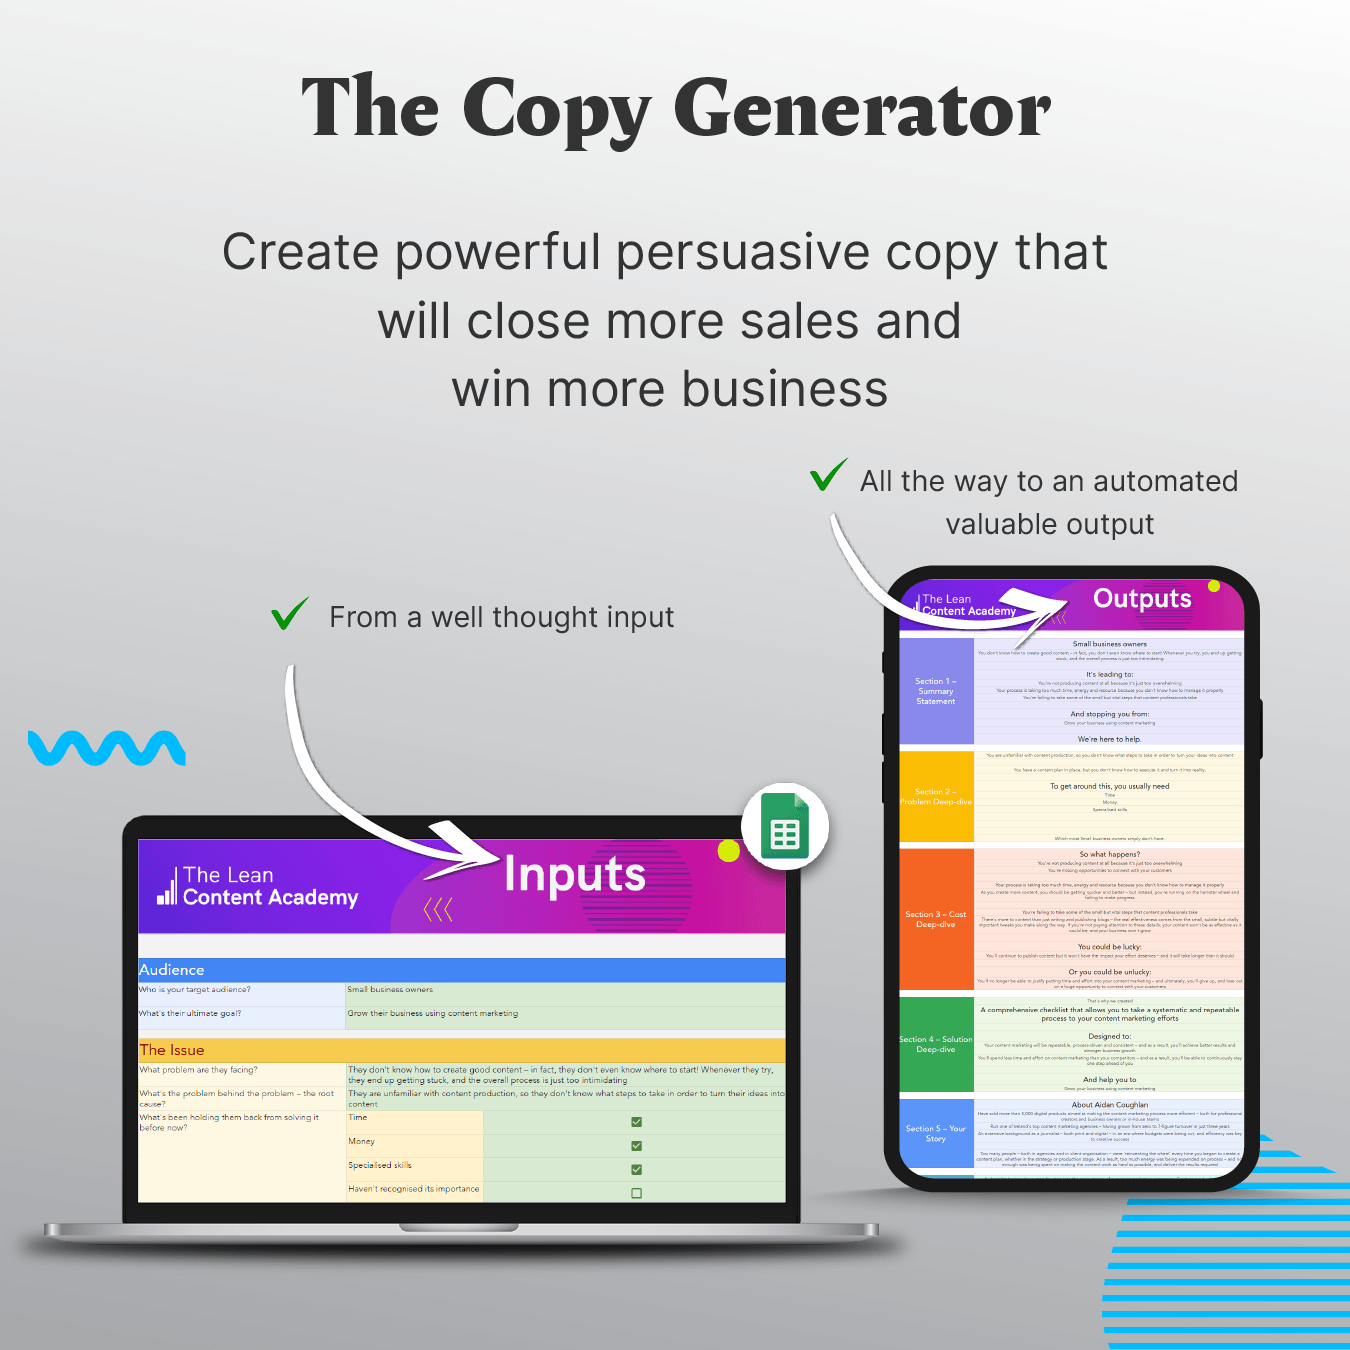 The Copy Generator: A Tool To Create Powerful, Persuasive Copy